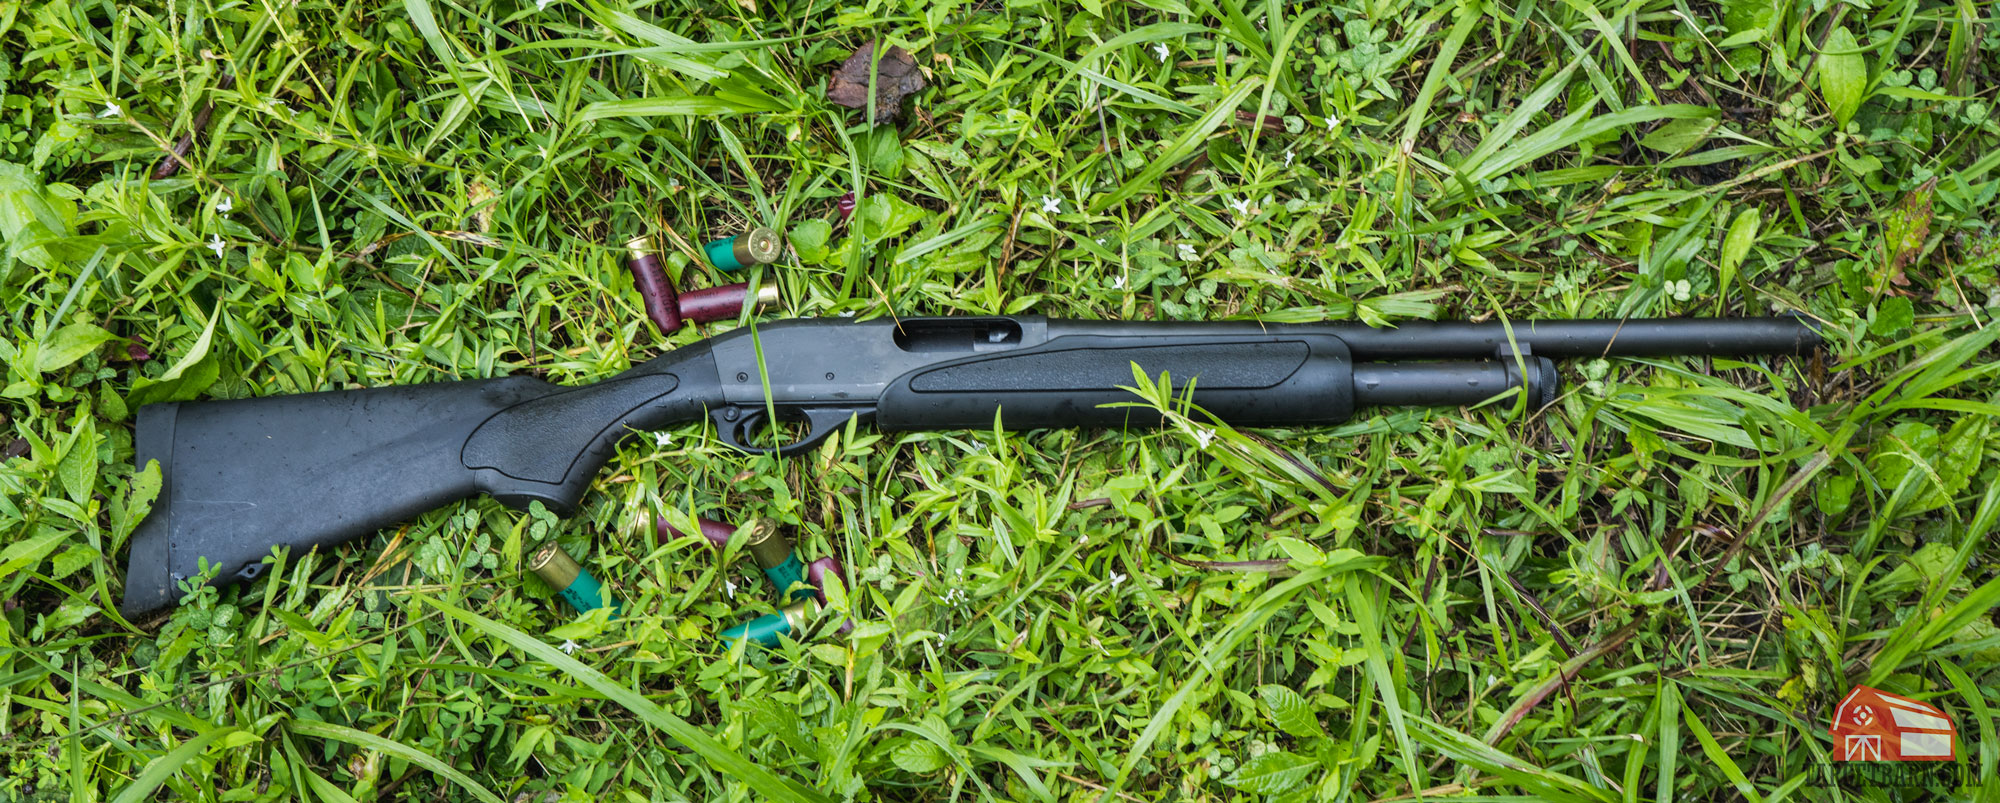 a shotgun and 12ga shells in the grass